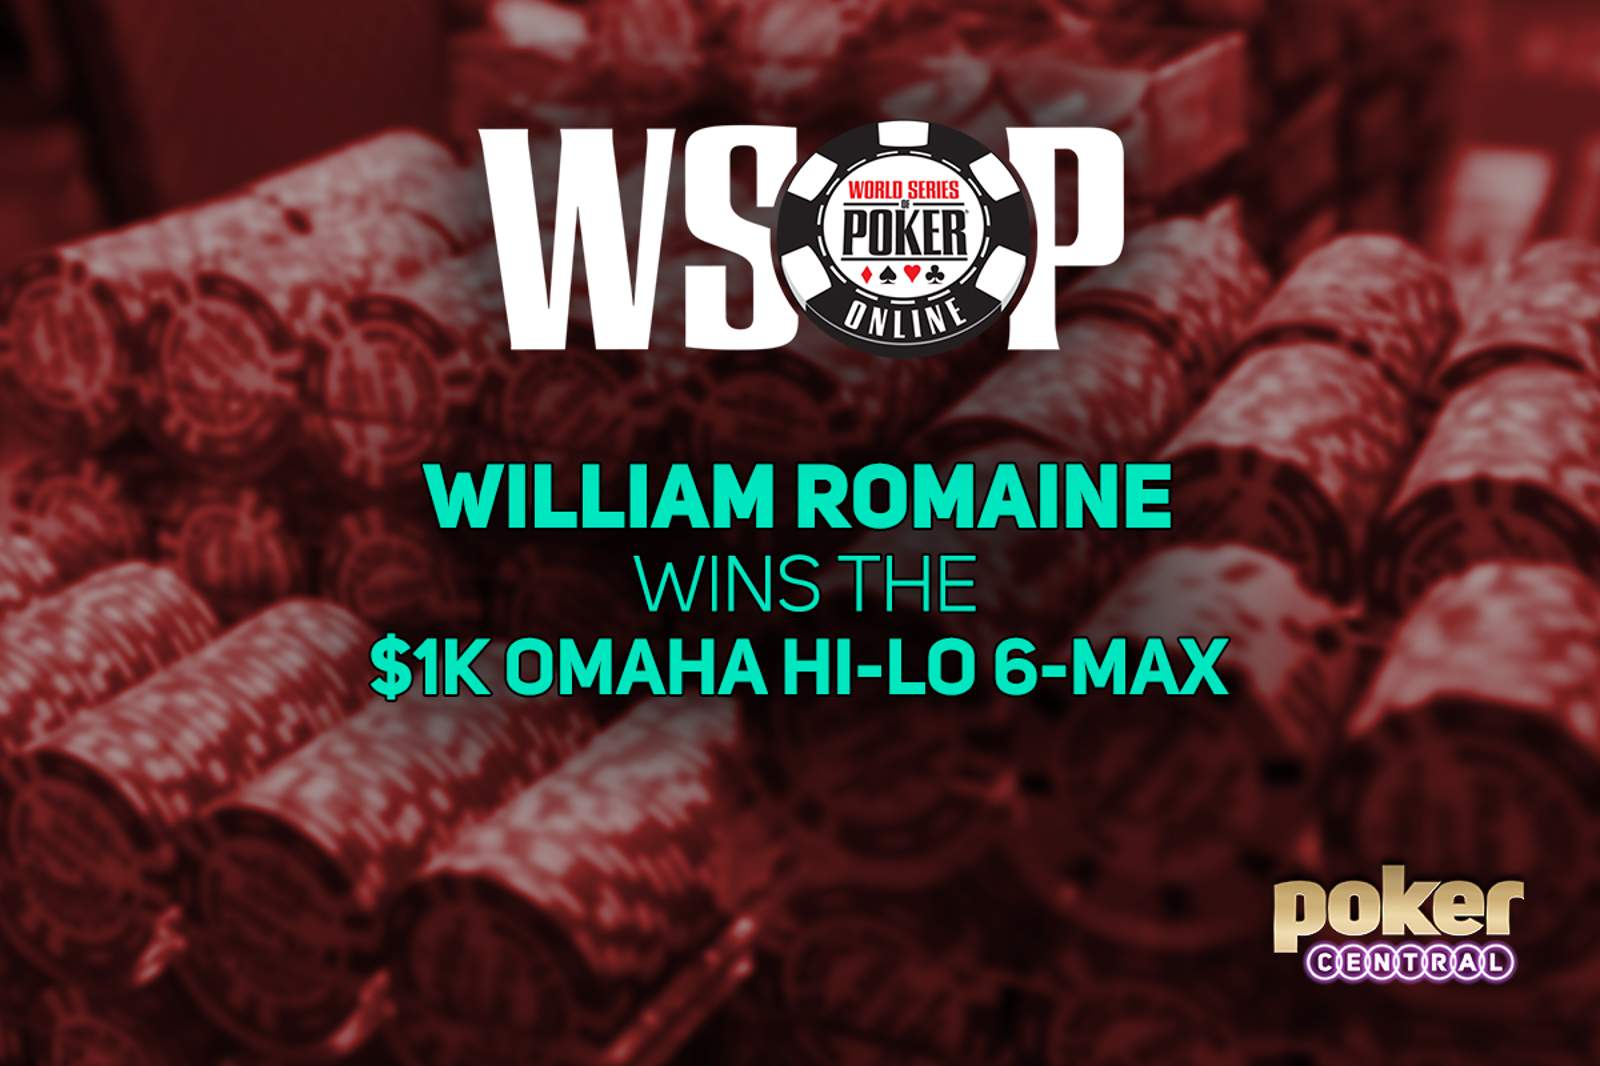 William Romaine Wins First Bracelet in WSOP Online $1,000 Omaha Hi-Lo 6-Max for $110,673